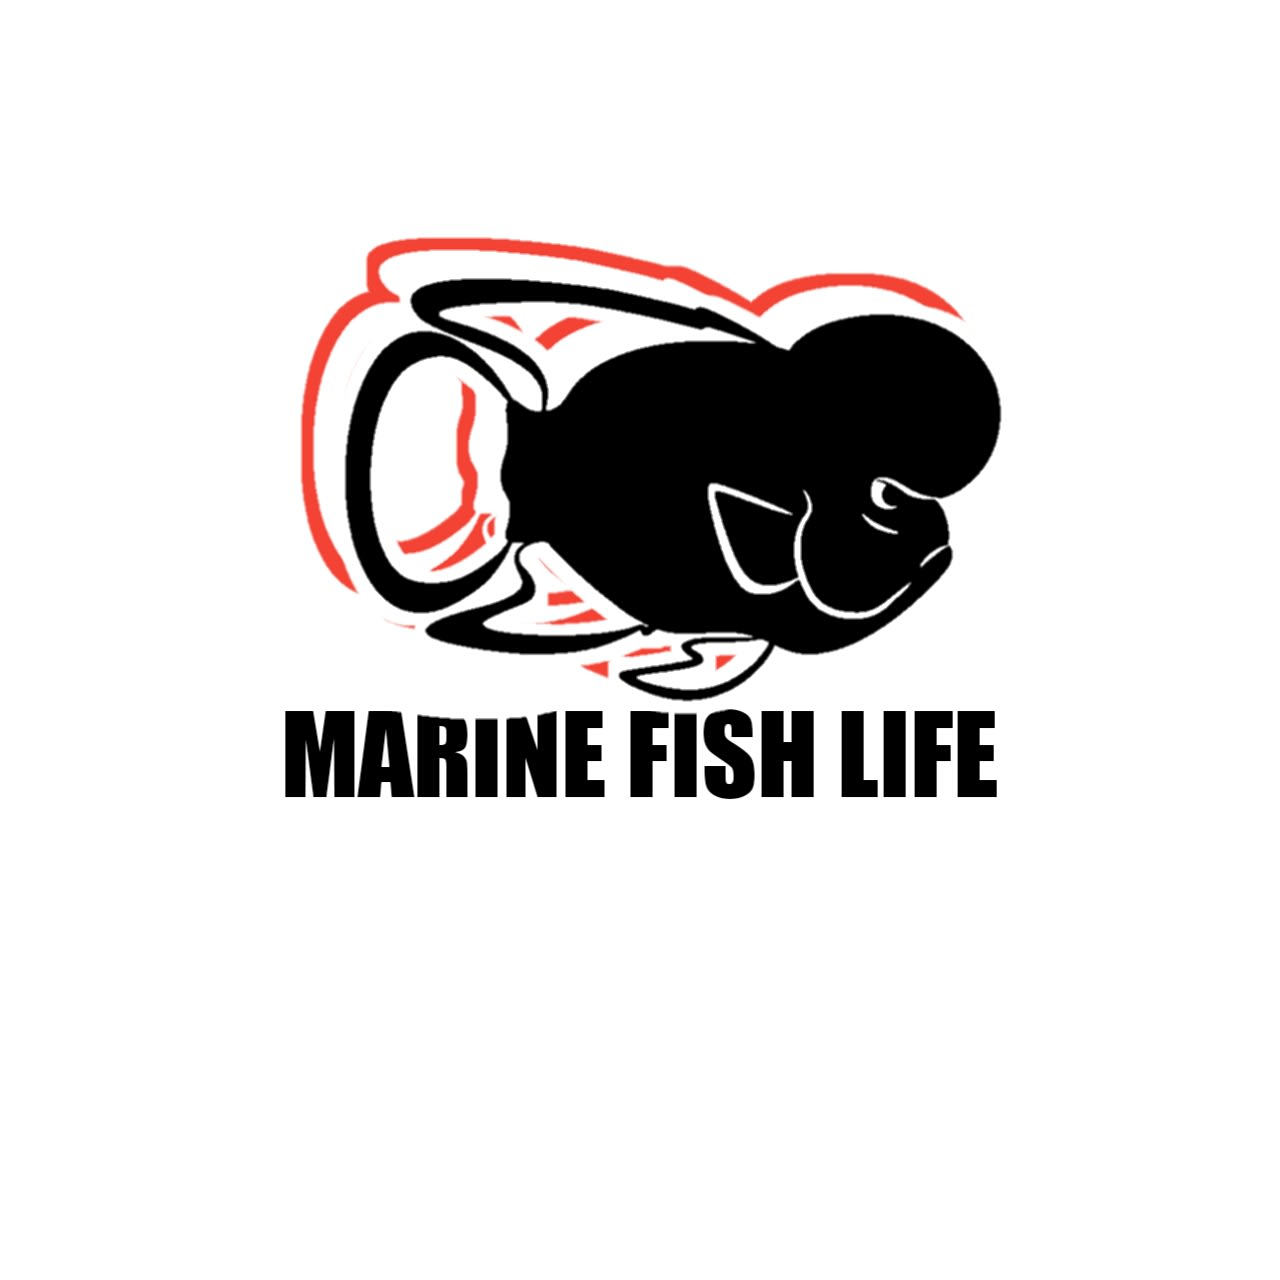 MARINE FISH LIFE